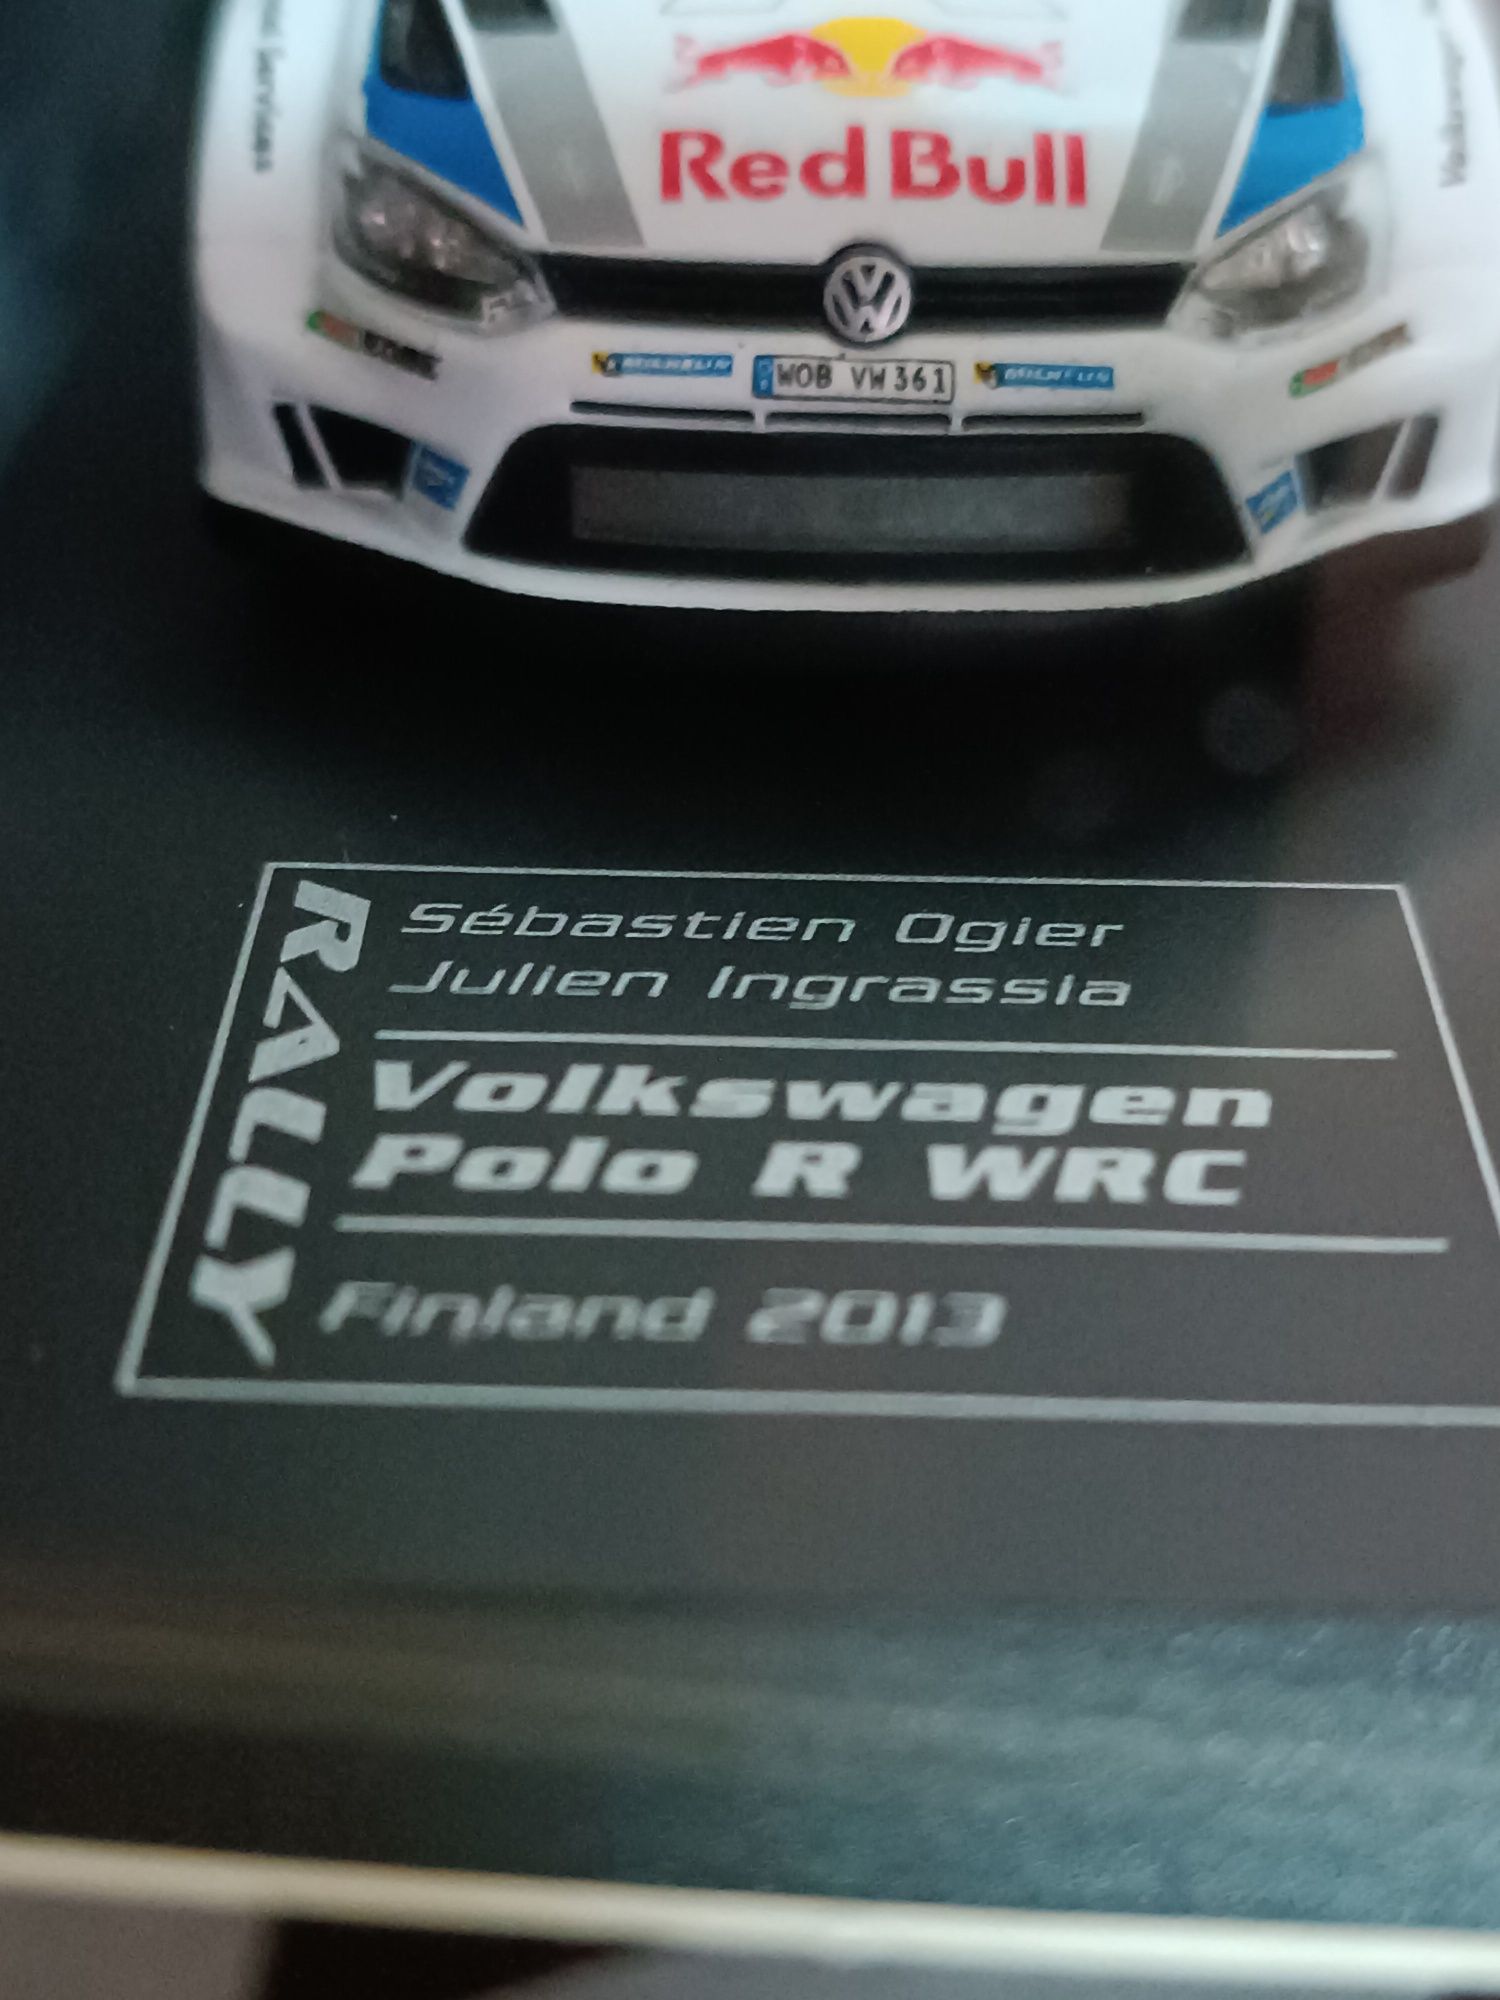 Volkswagen Polo R WRC 1/43
Sebastian Ogier - J. Ingrassia
Rally Finlâ